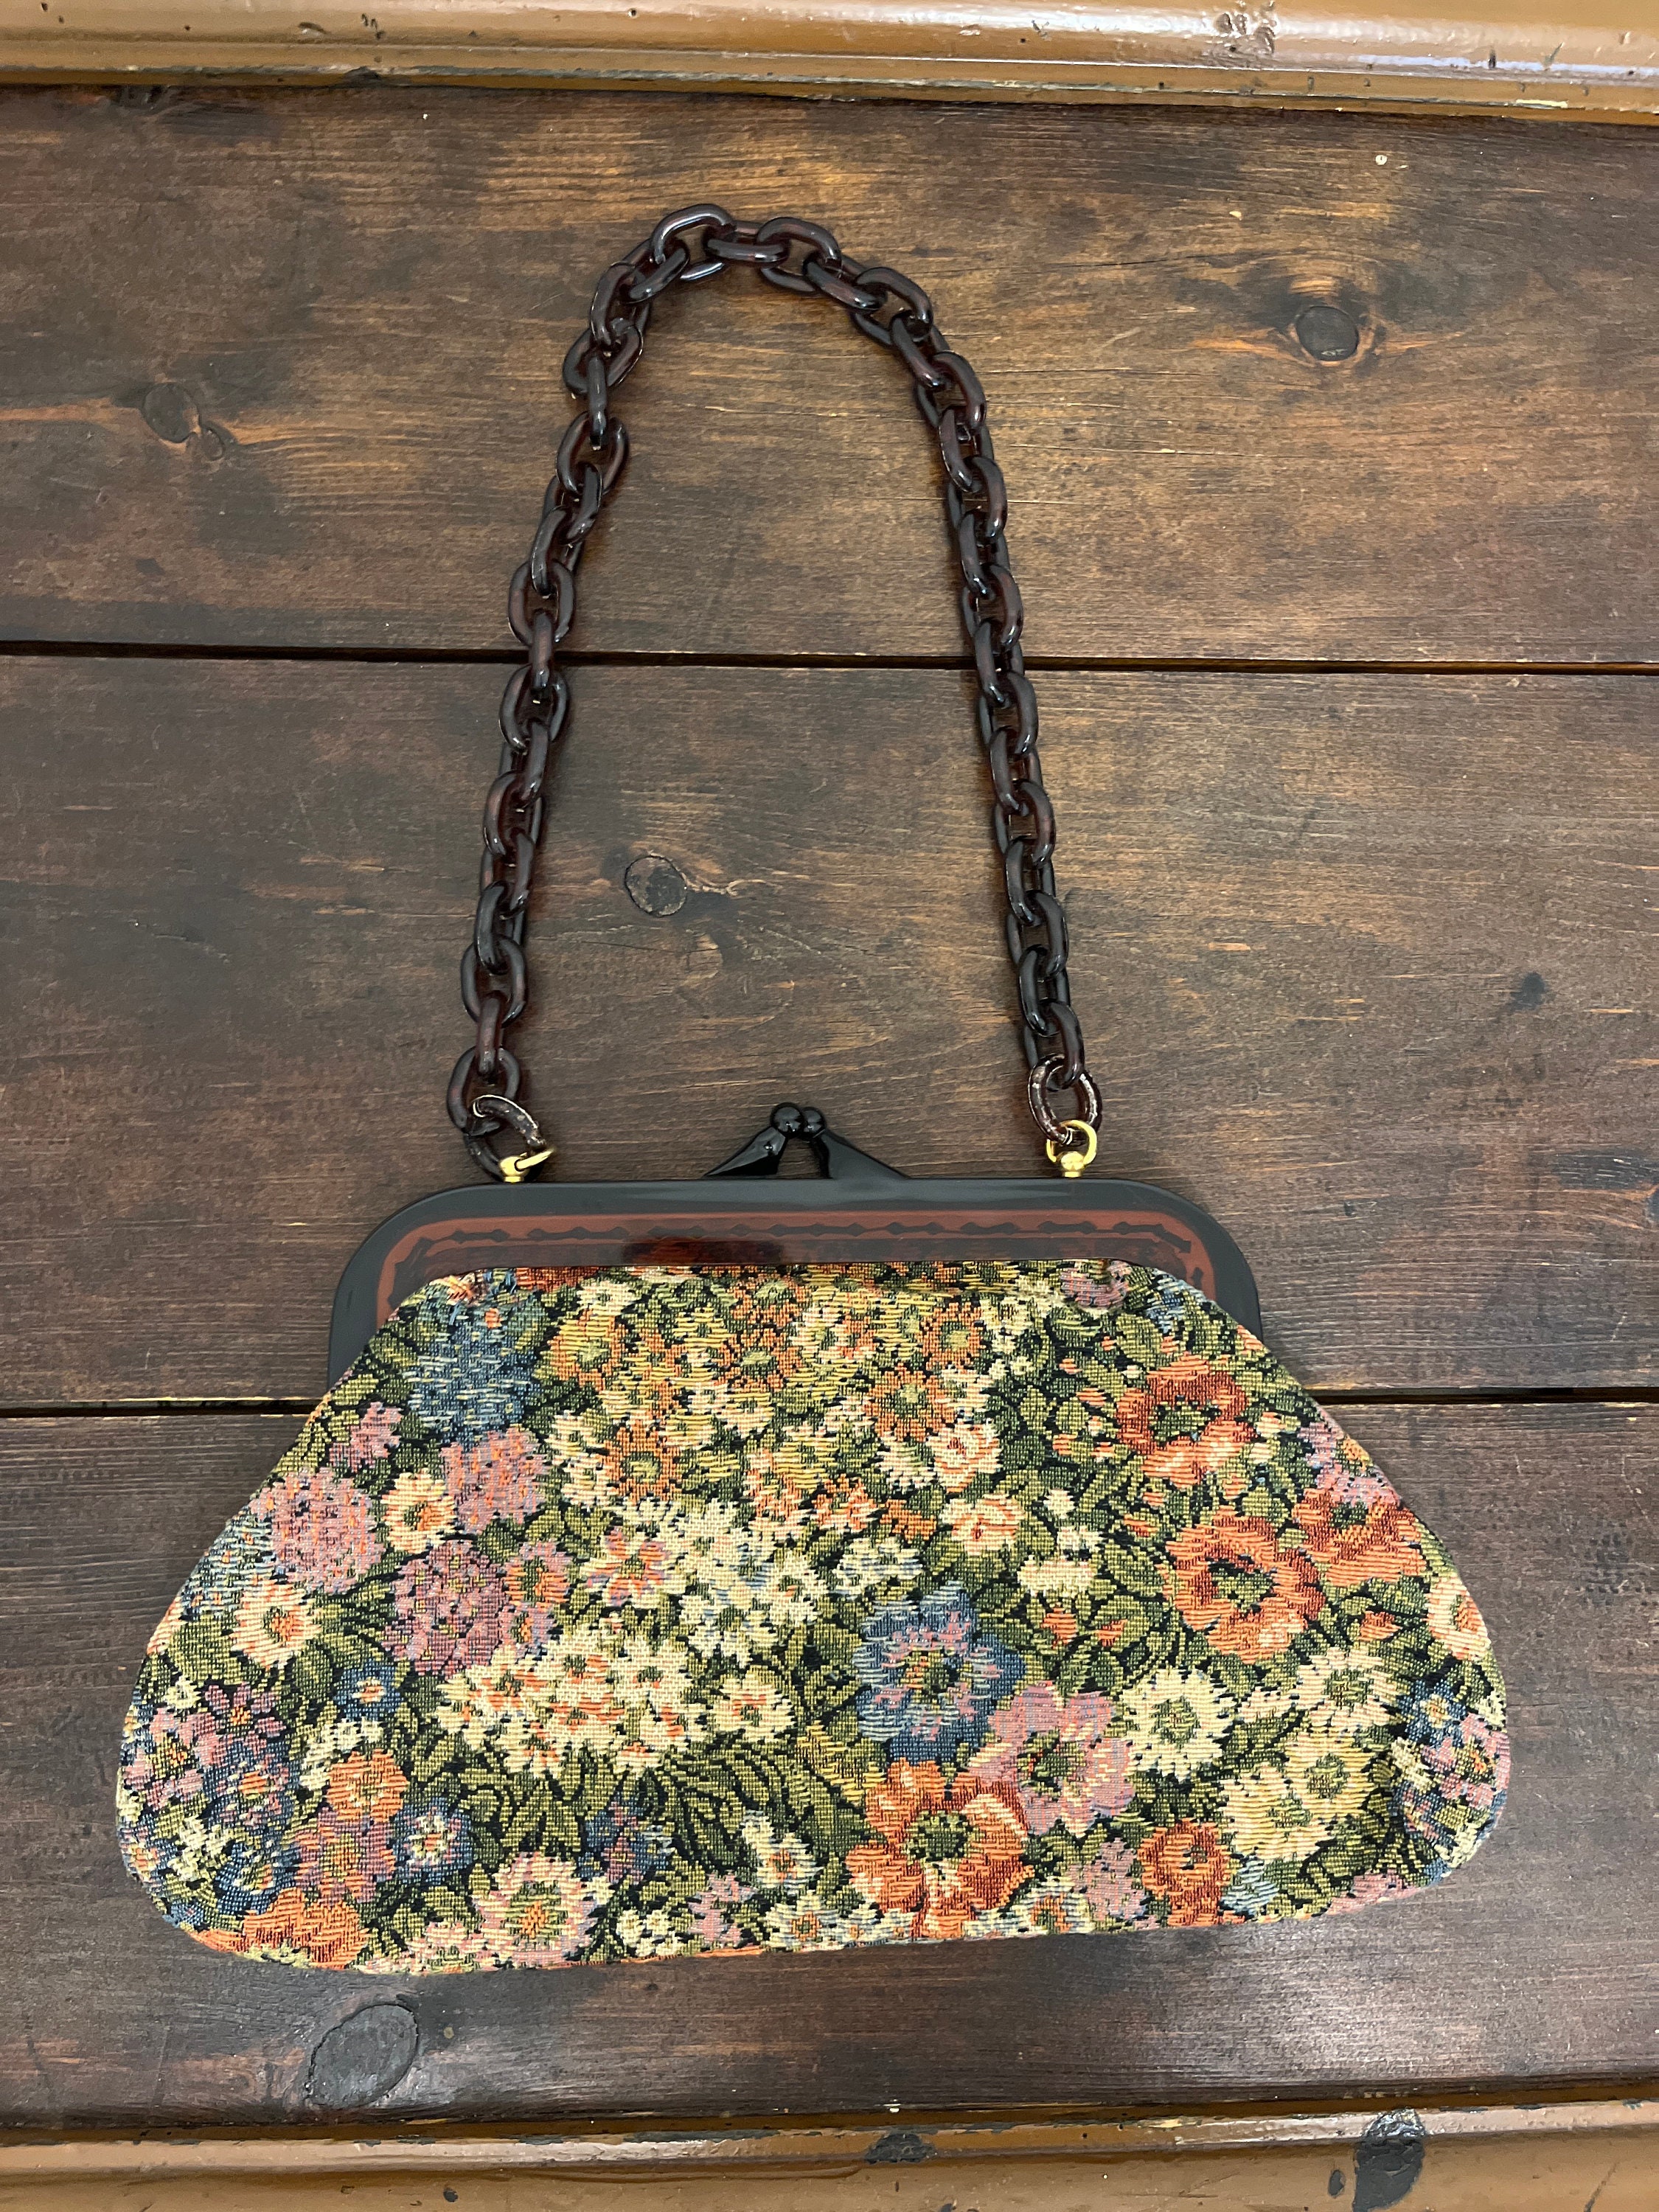 Brown Leather Handbag With Floral Vintage Needlepoint, Handmade